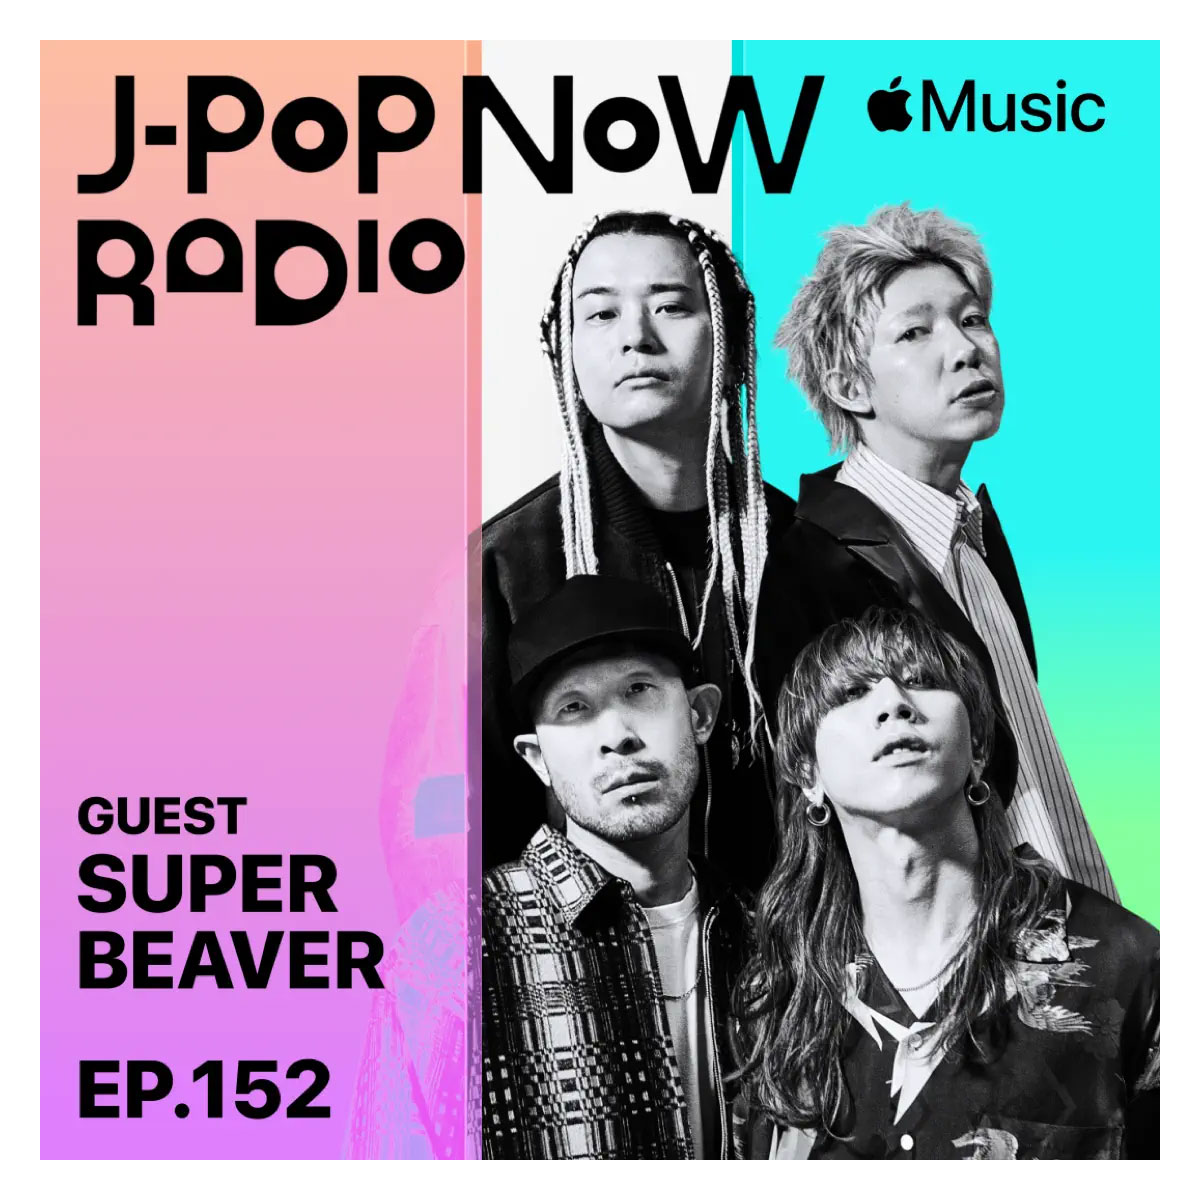 J-Pop Now Radio with Kentaro Ochiai 特集：SUPER BEAVER